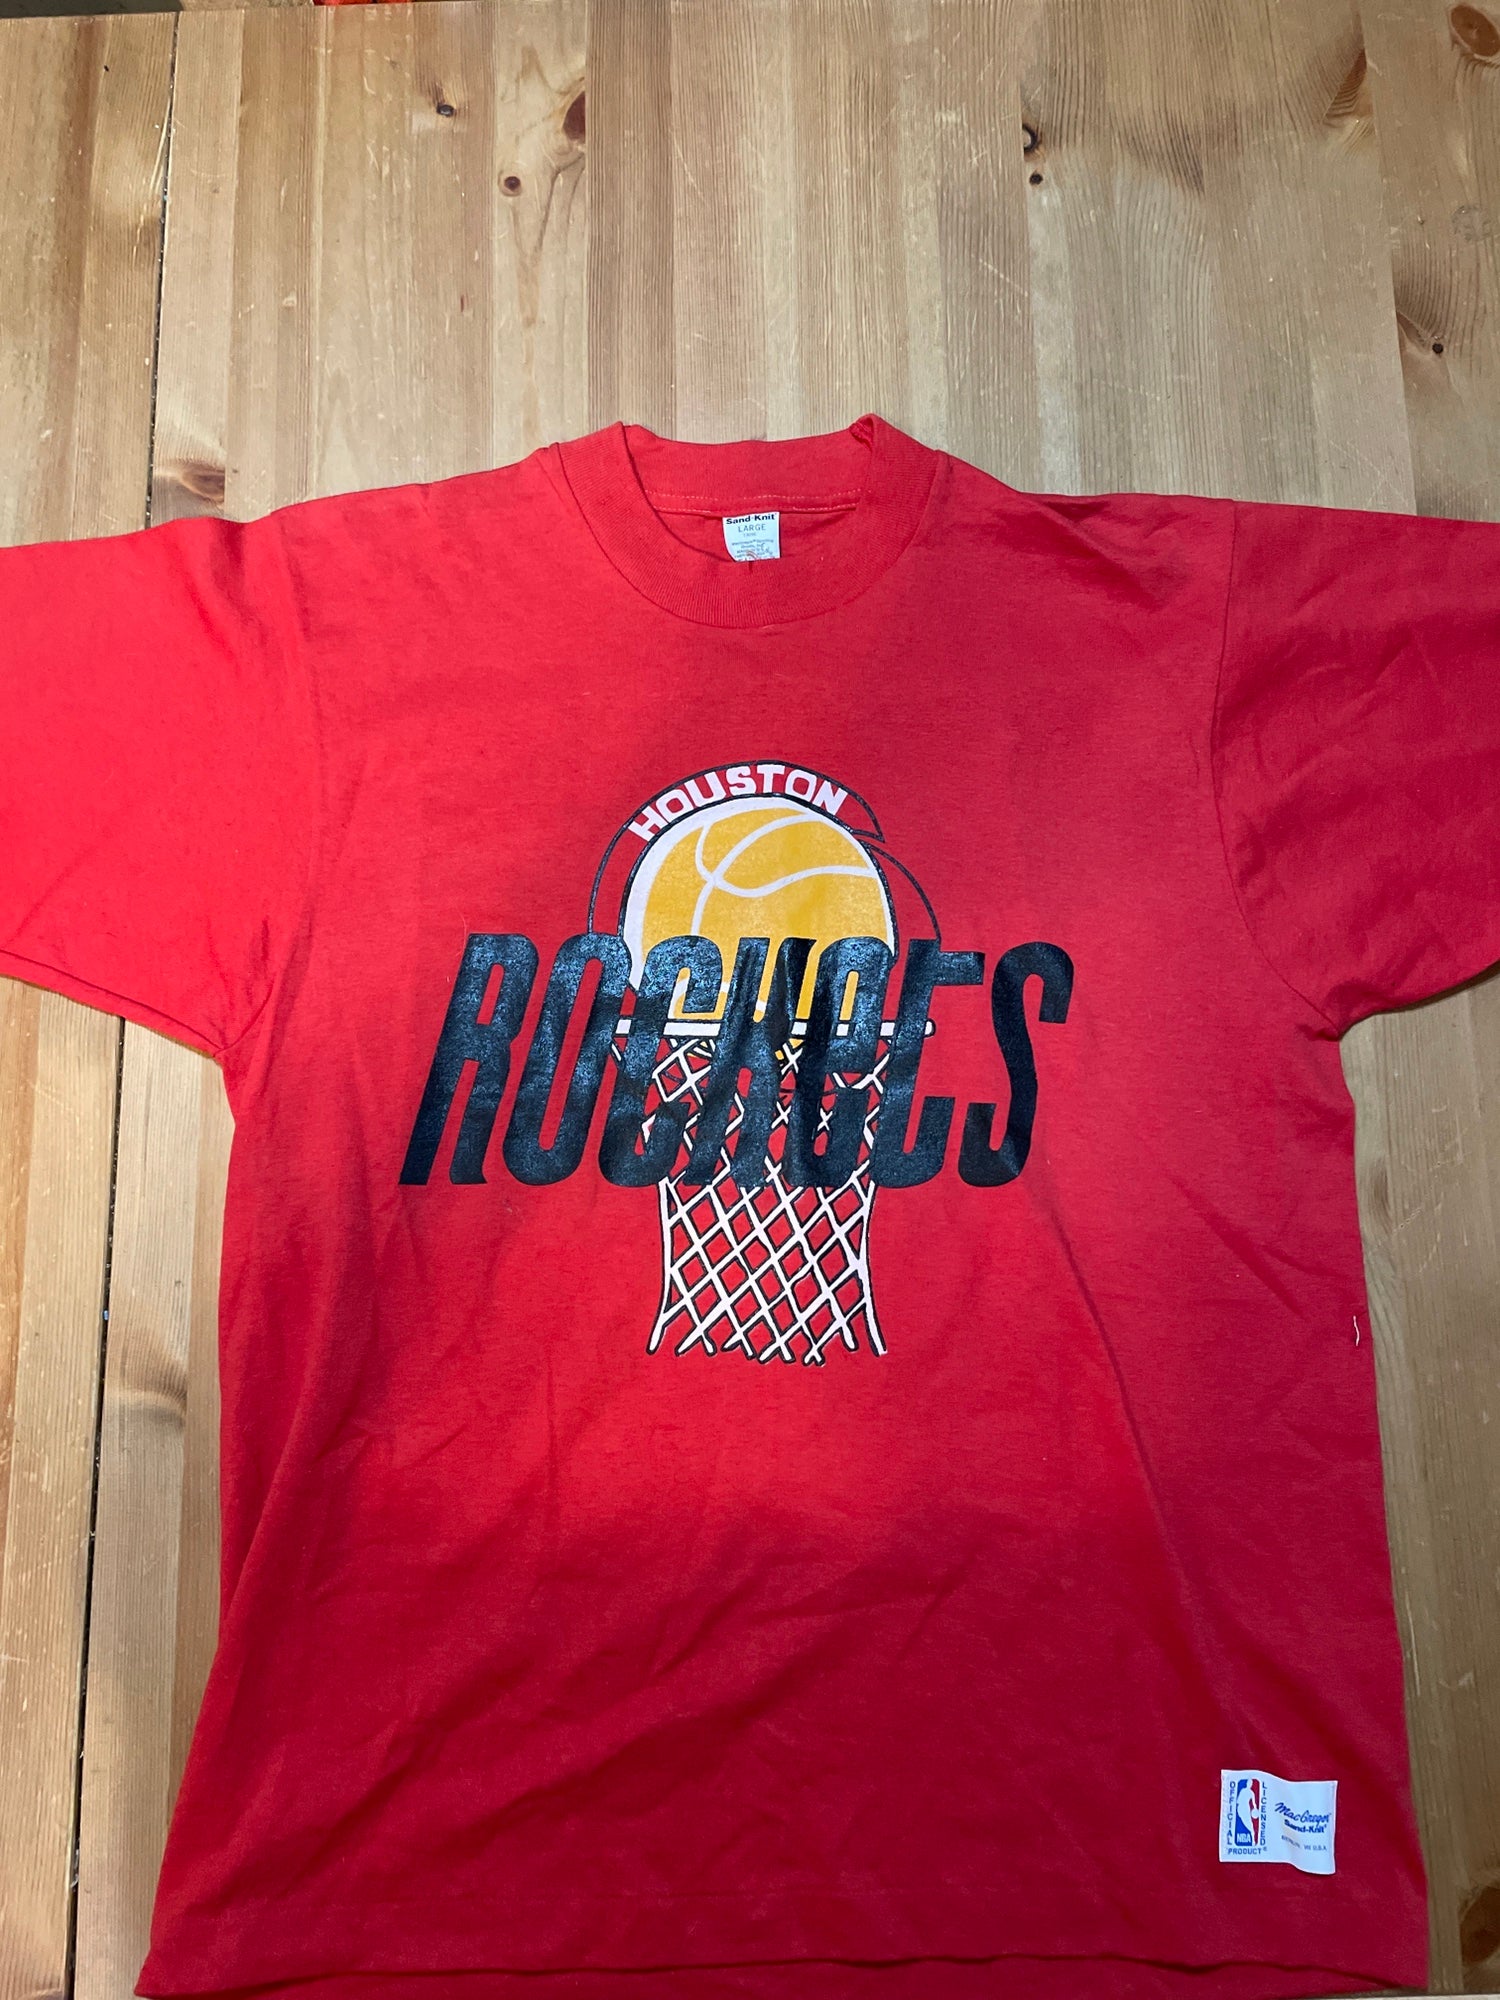 Vintage Houston Rockets Clothing, Rockets Retro Shirts, Vintage